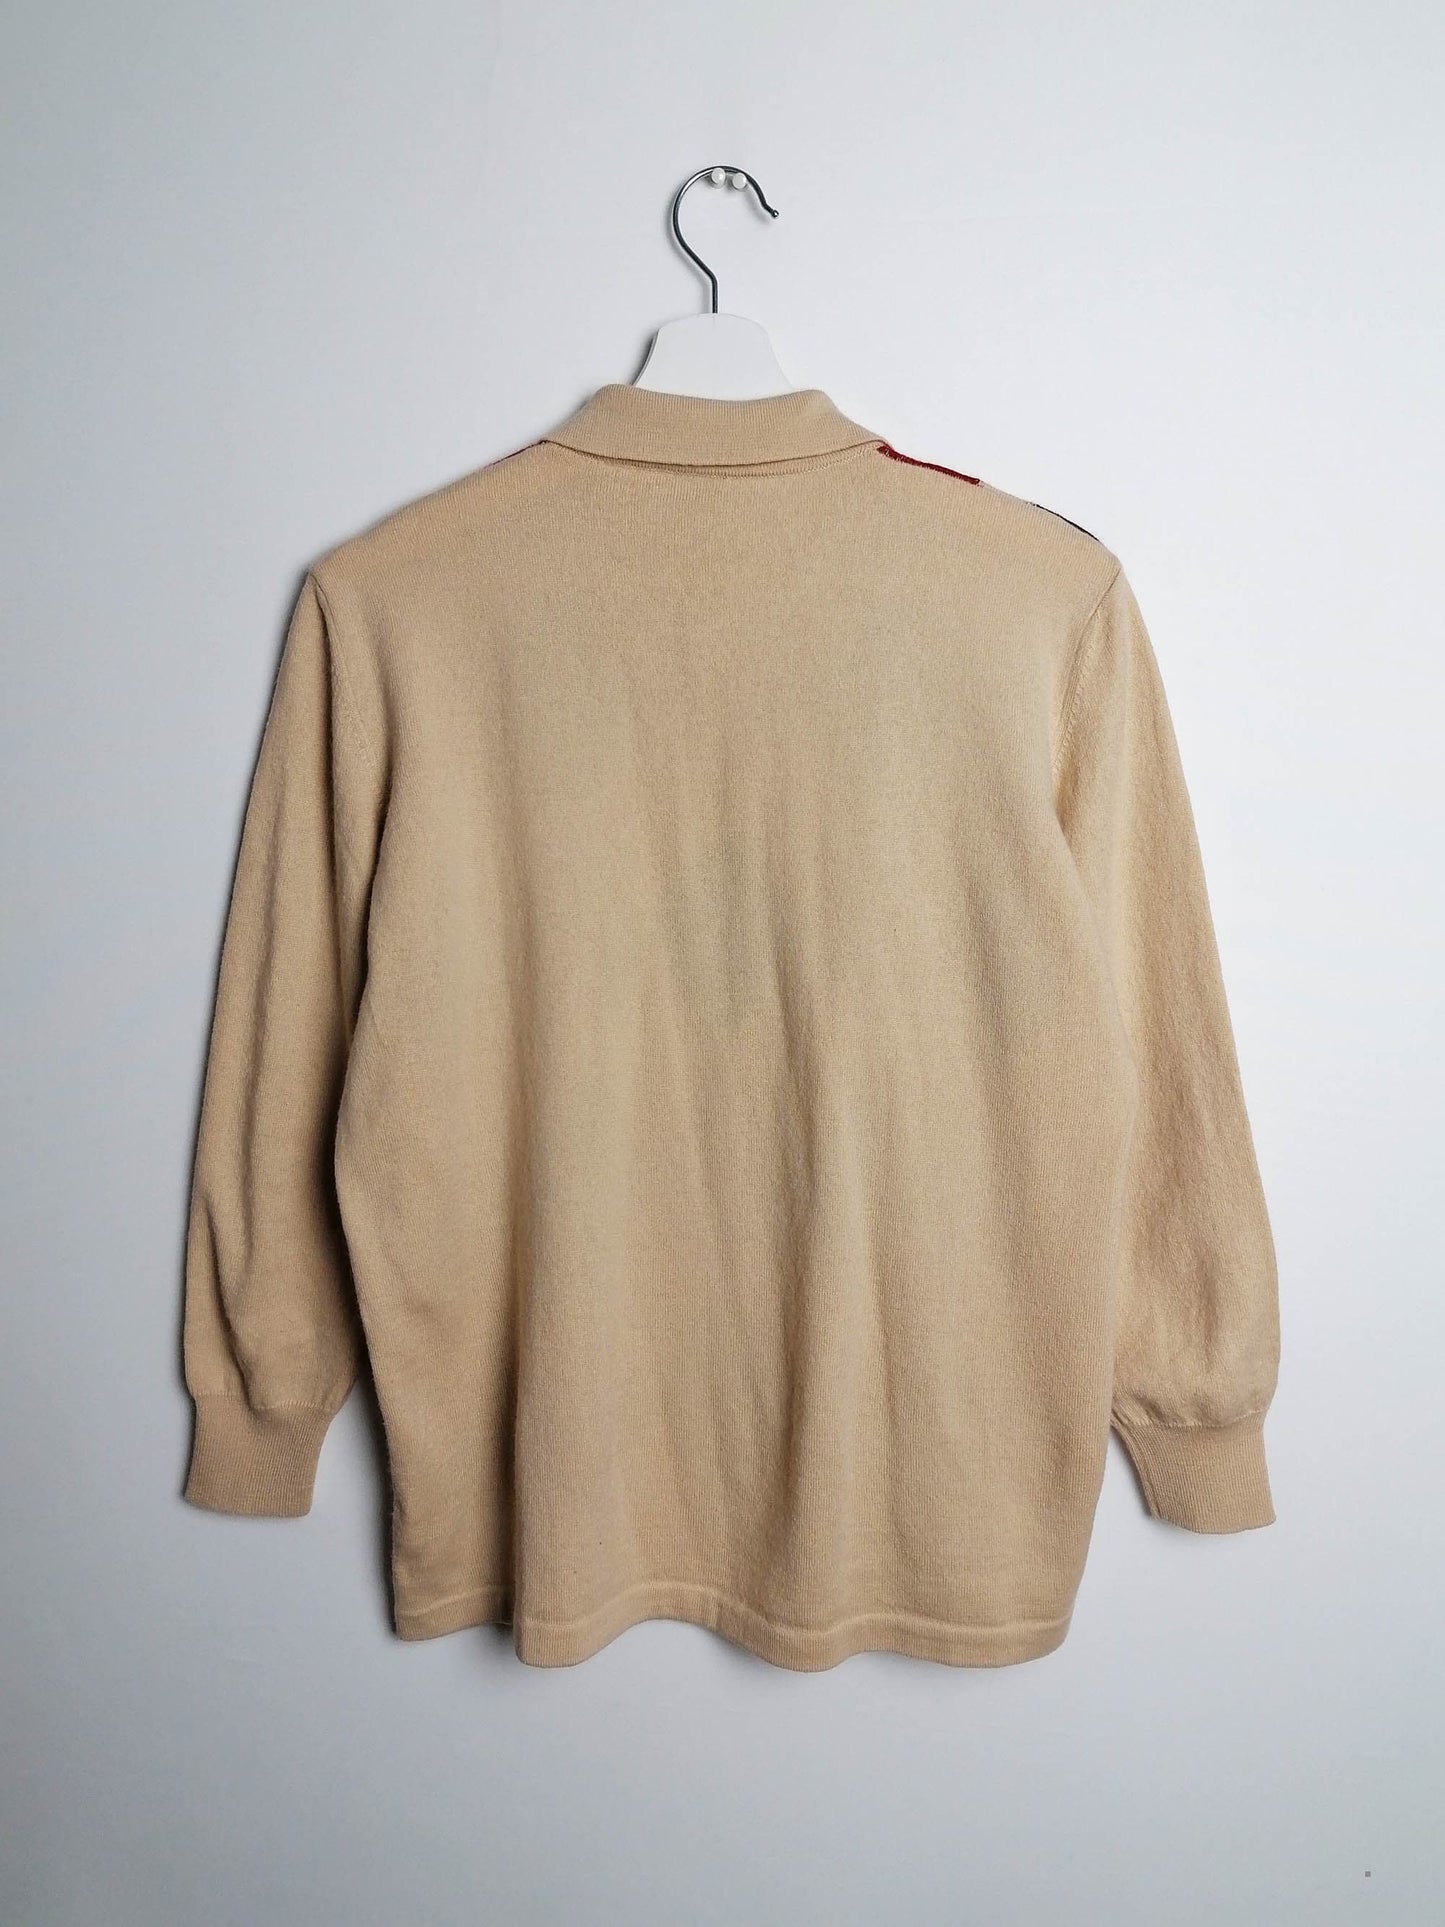 CLARINA Merino Wool Blend Argyle Pattern Sweater - size M-L / 46